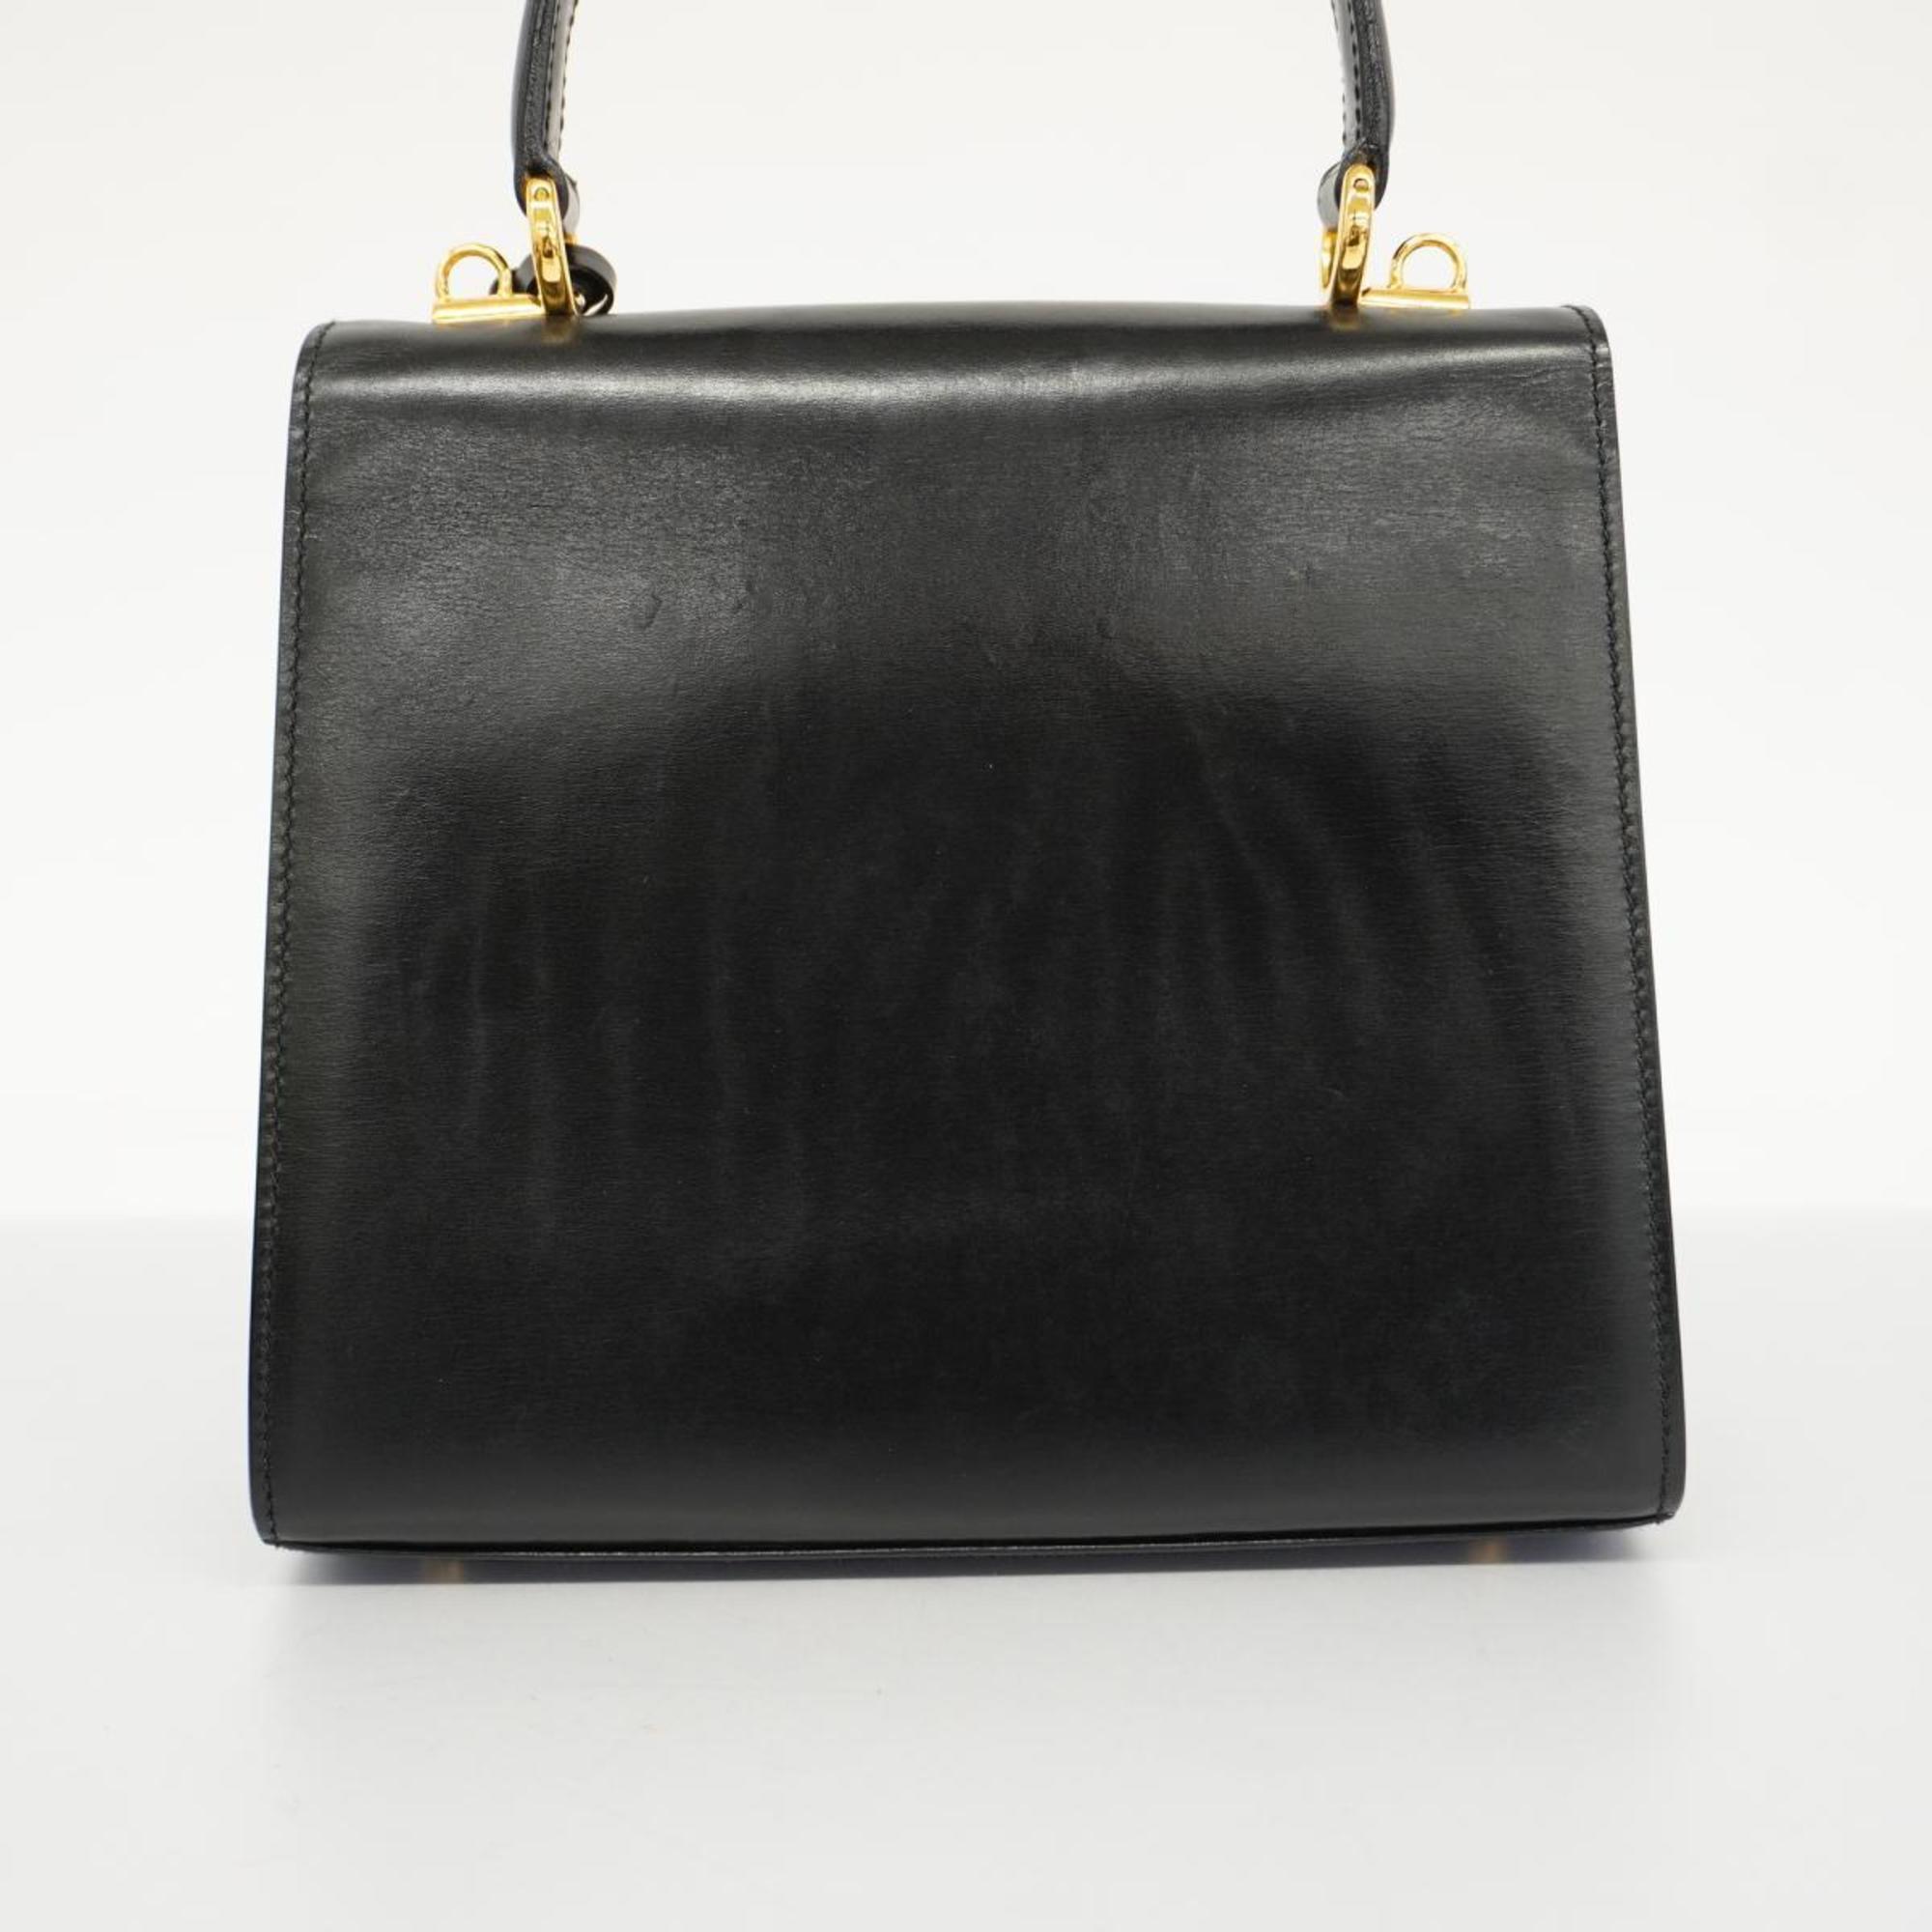 Gucci handbag 000 110 0211 leather black ladies